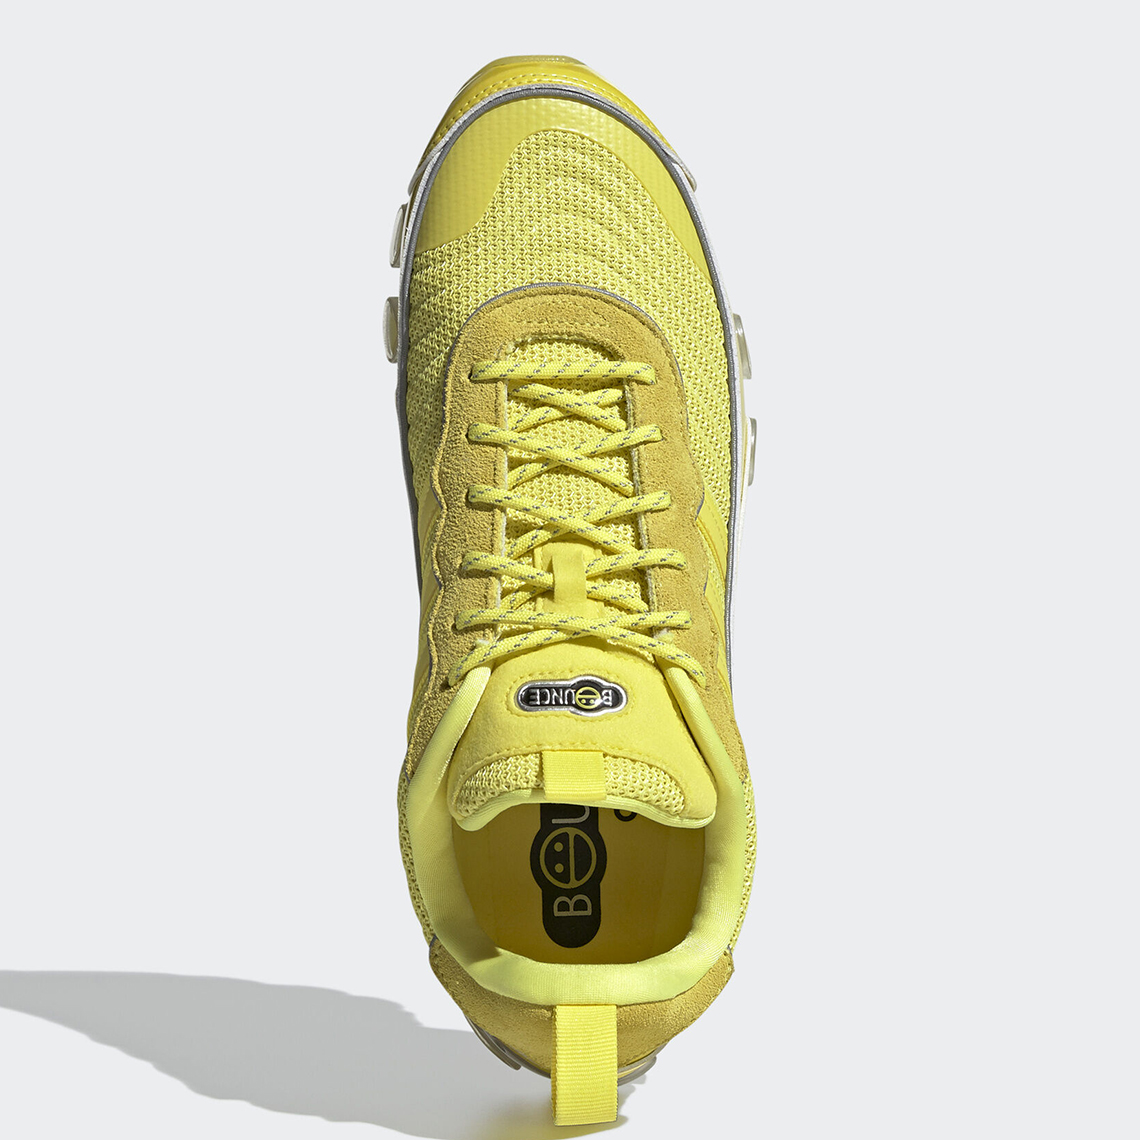 Adidas Microbounce Yellow Fw9598 6